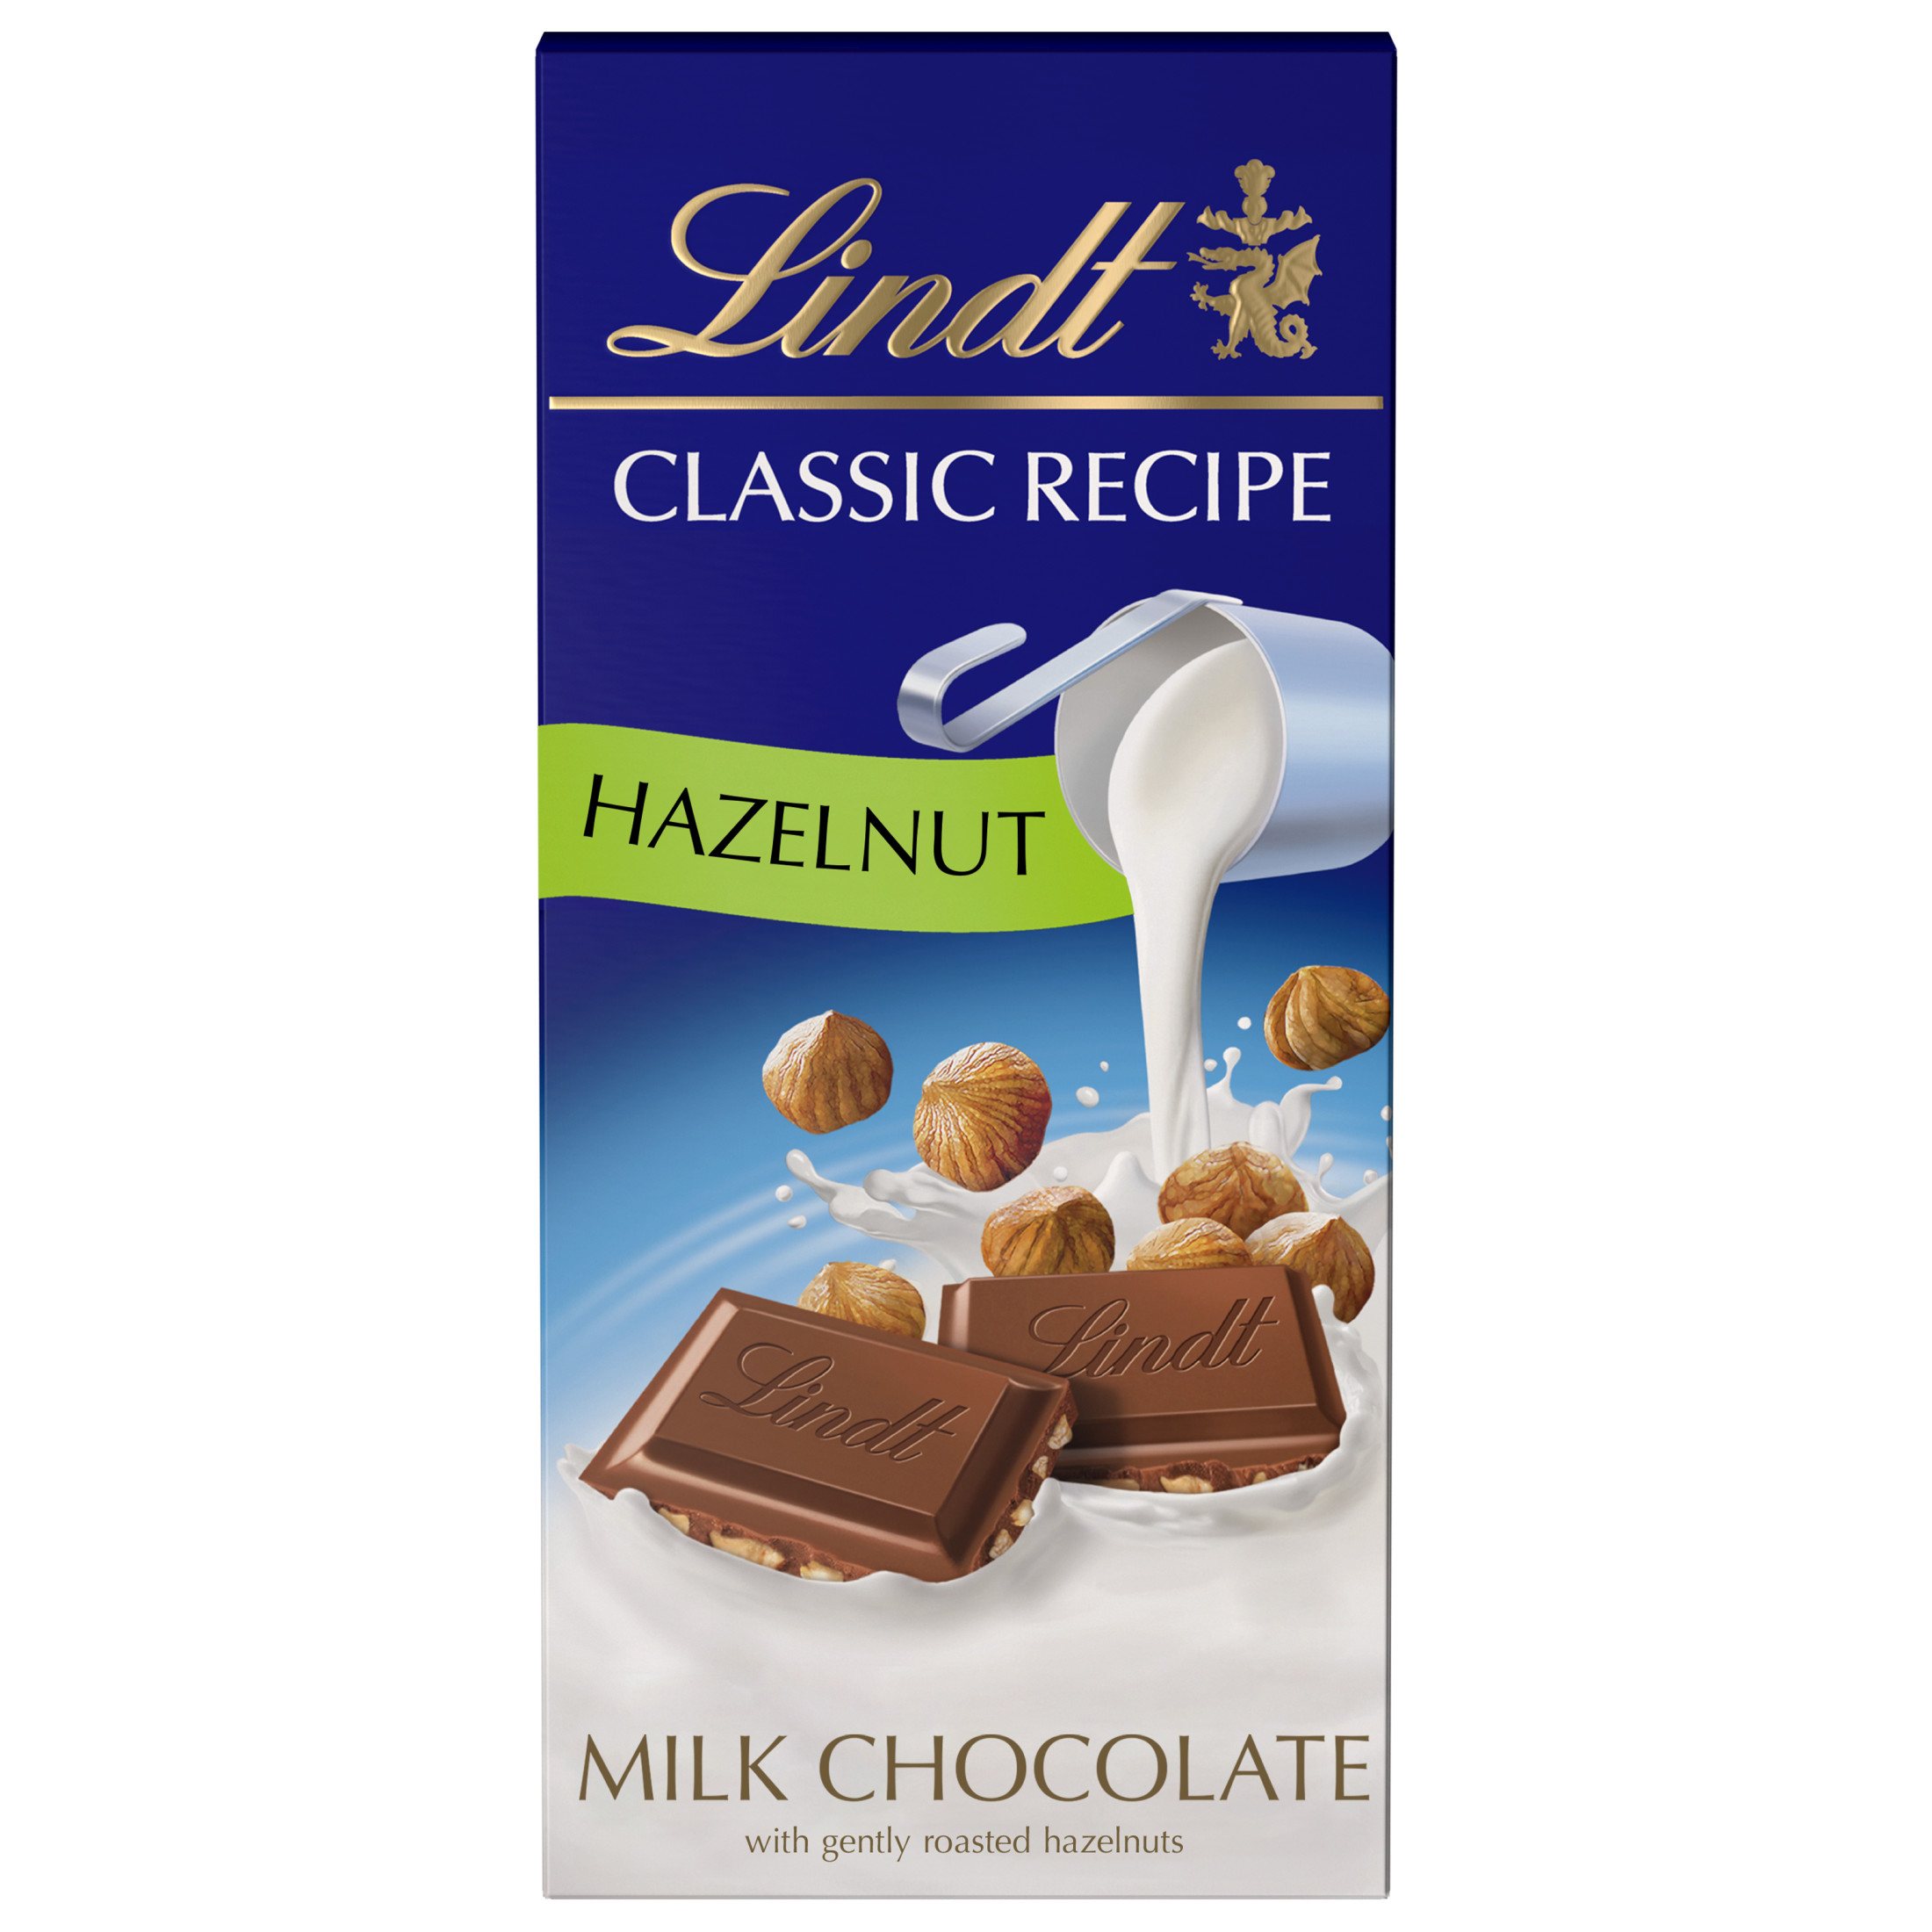 Lindt Classic Recipe Hazelnut Milk Chocolate Candy Bar, 4.4 oz. - image 1 of 12